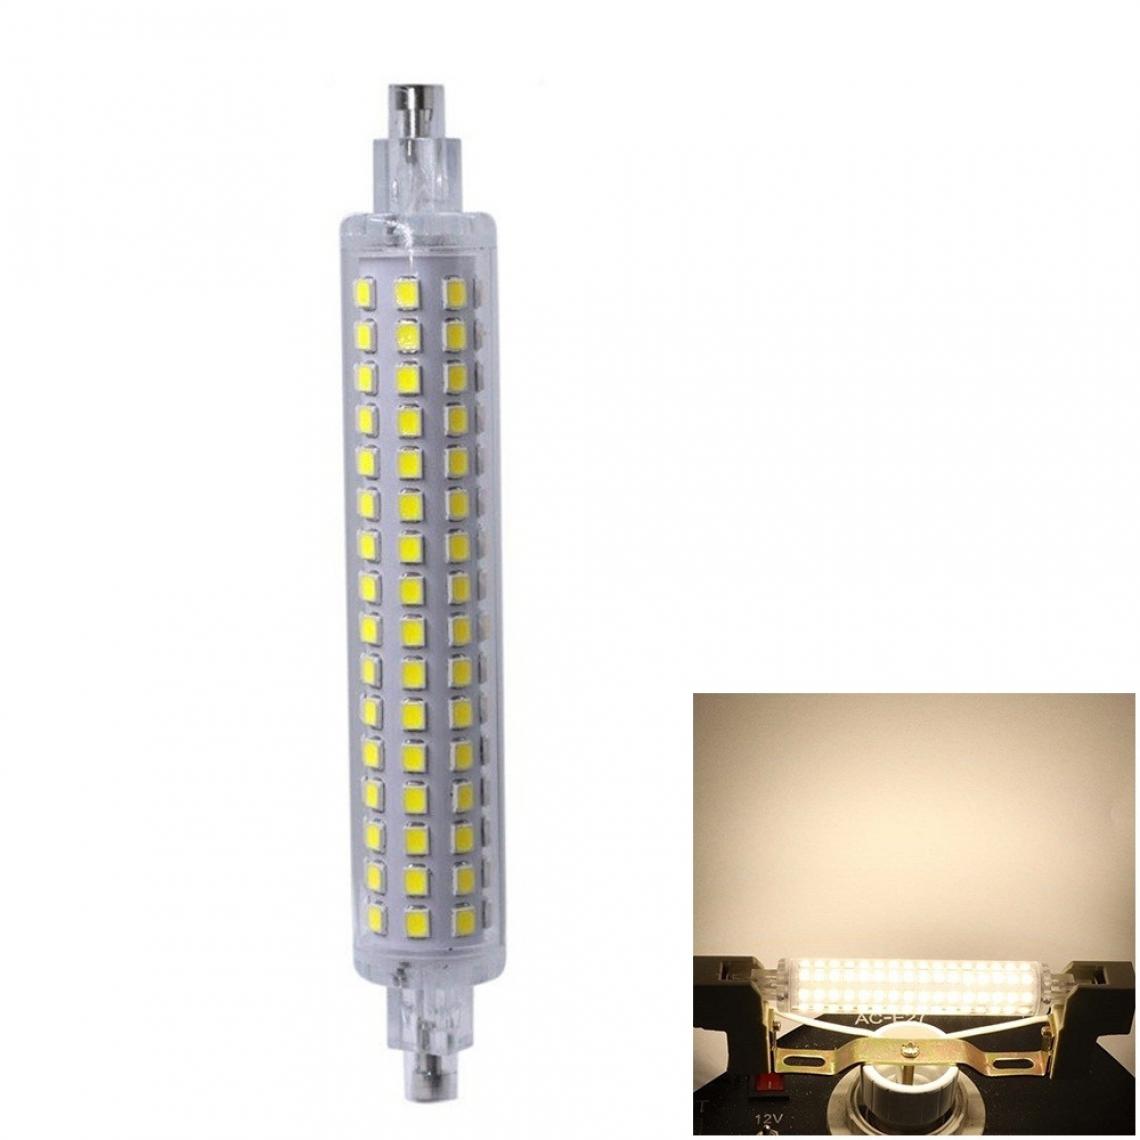 Wewoo - R7s SMD 2835 118mm Lampe en céramique à 128 LEDs Taille blanc naturel 220V - Ampoules LED